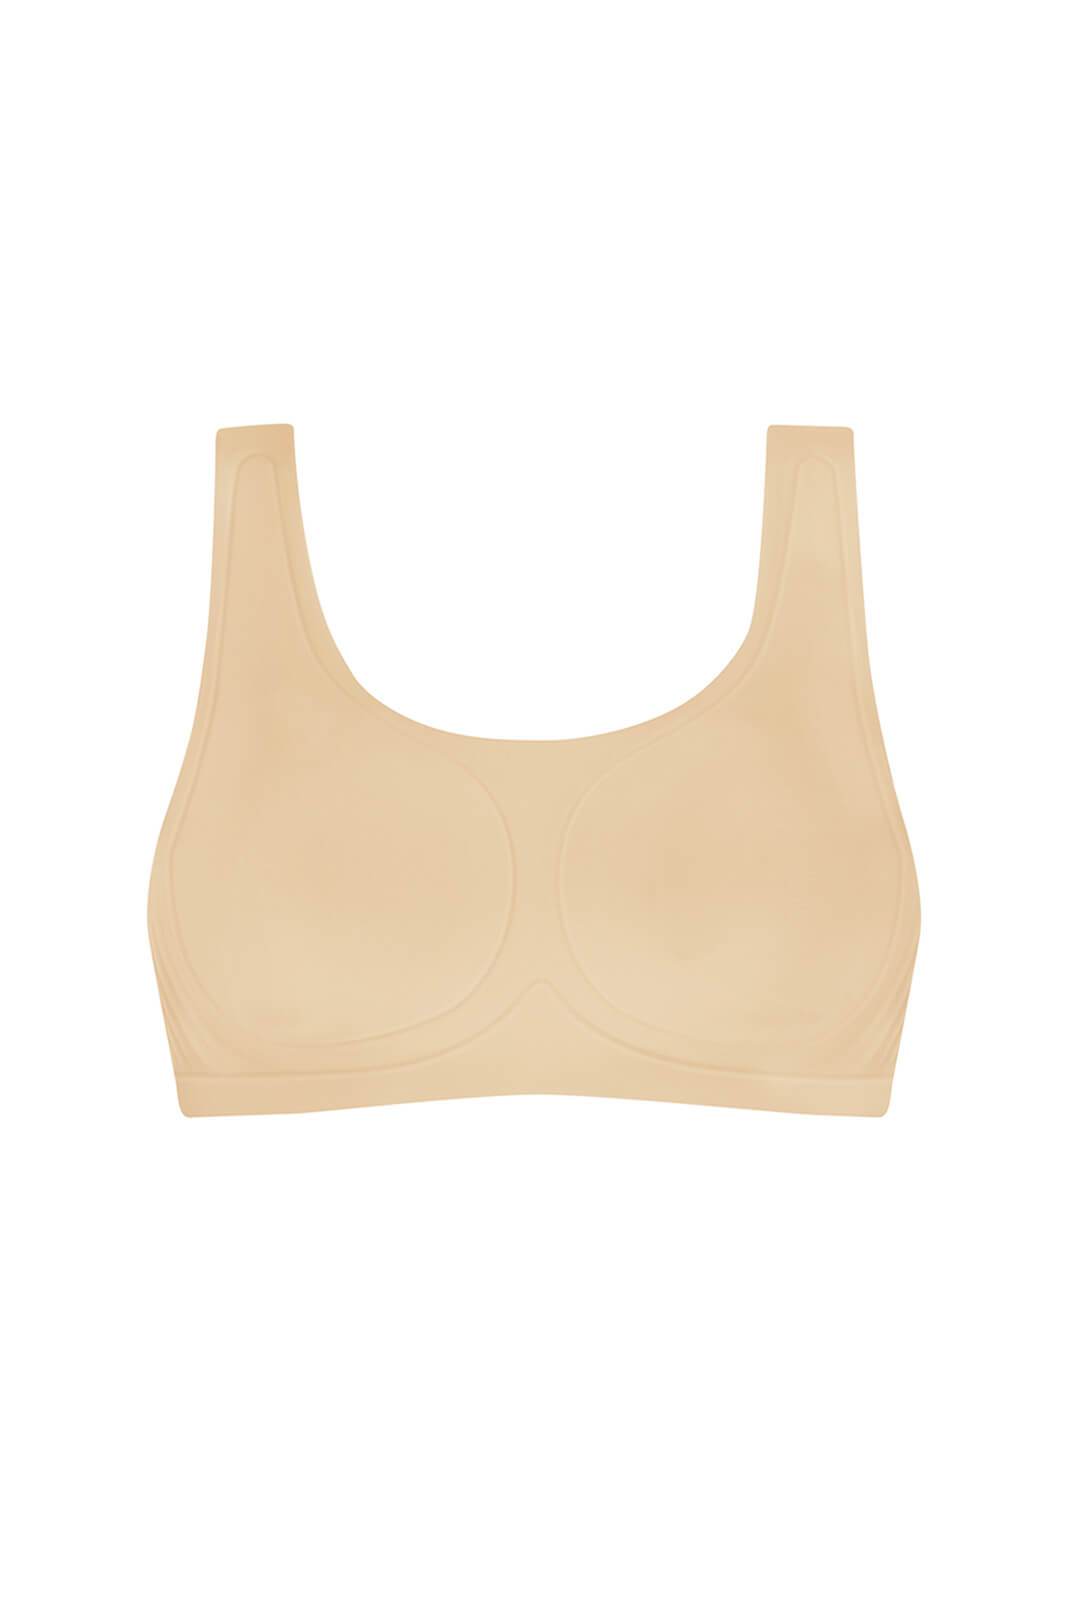 Amoena Marlena Wire-Free bra Soft Cup, Size 36D, Blush Ref